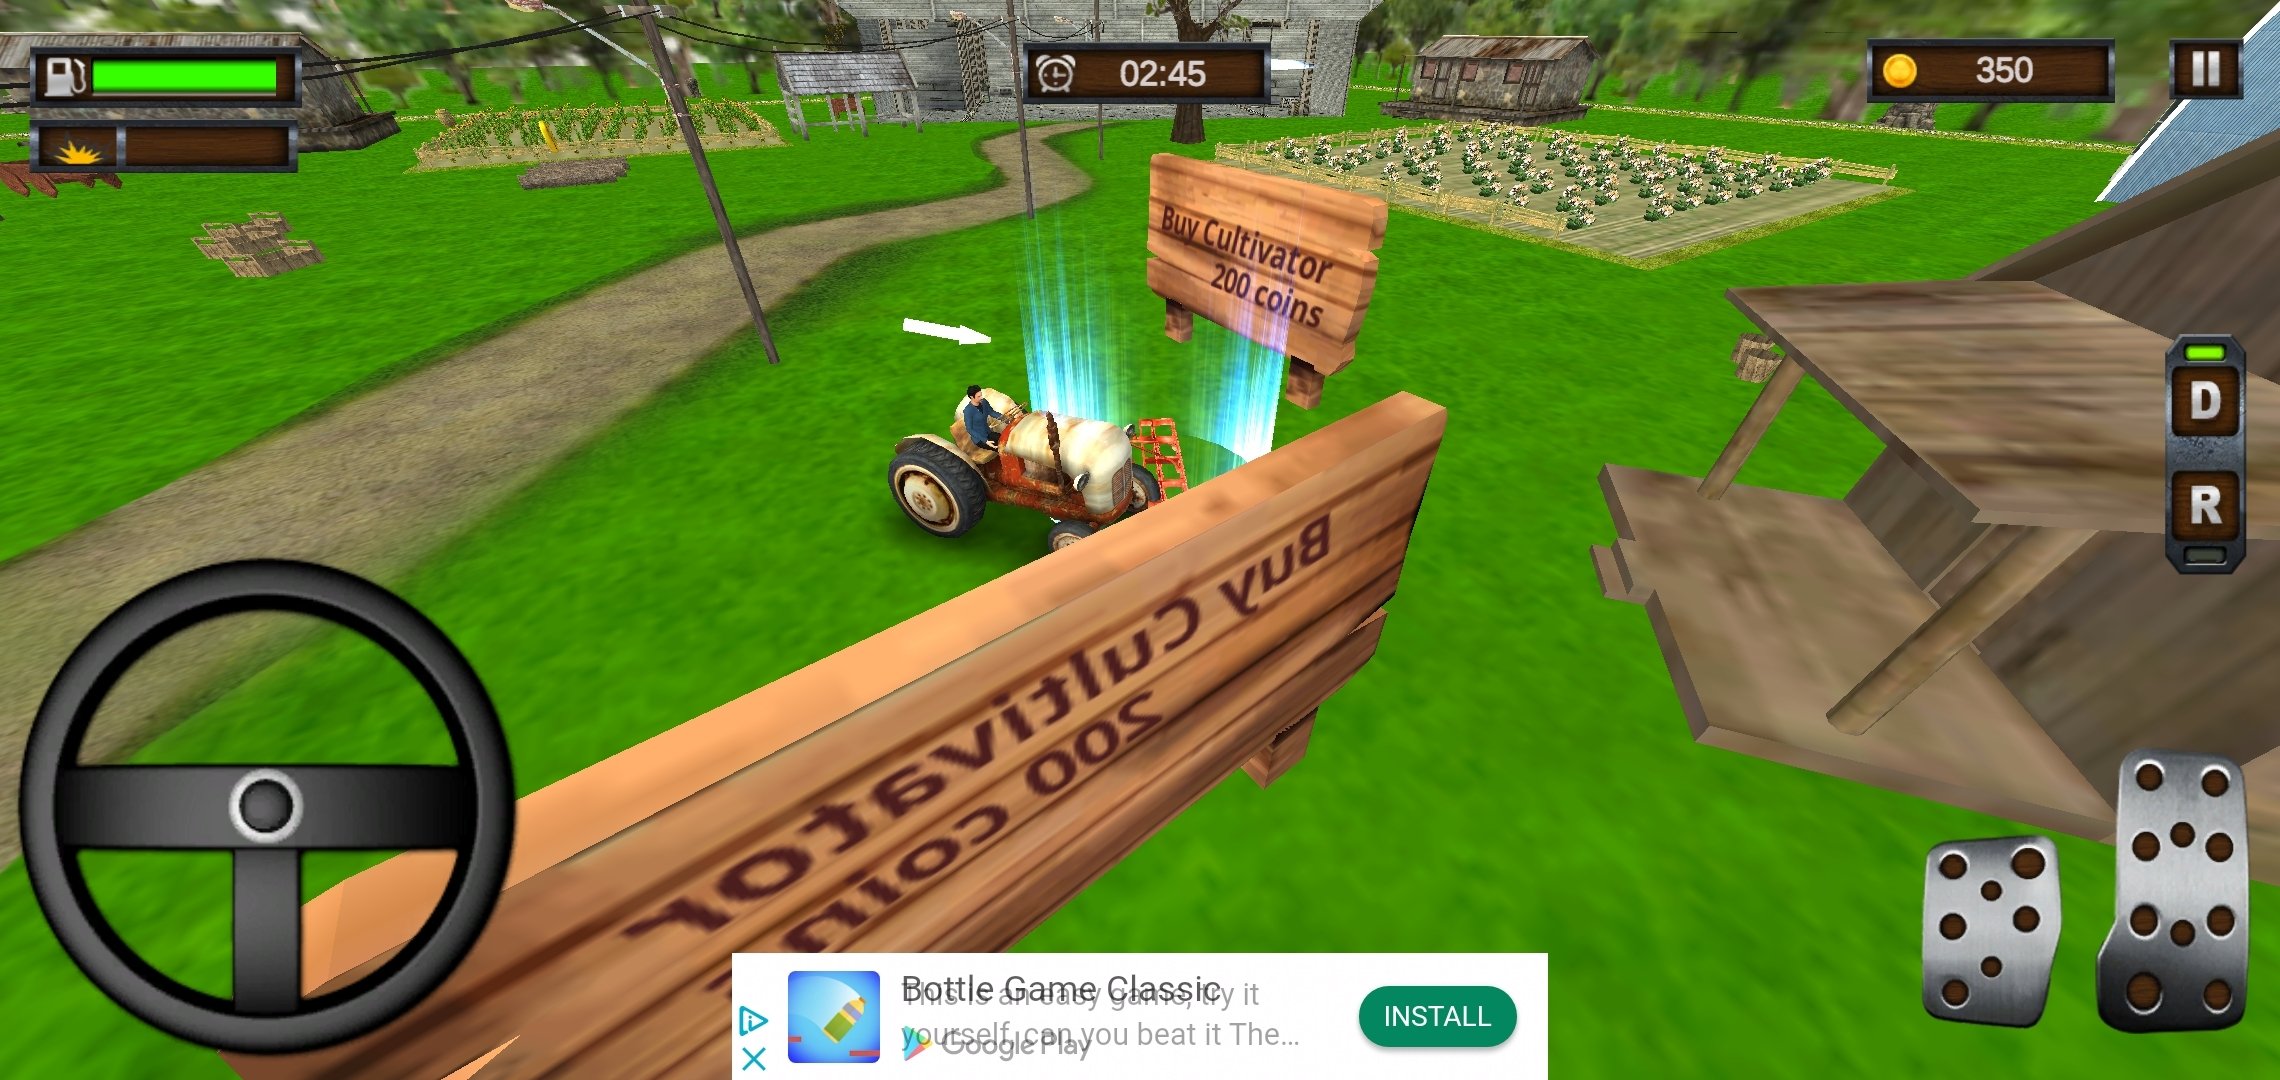 Tractor simulator 3D: Hay 2 Baixar APK para Android (grátis)